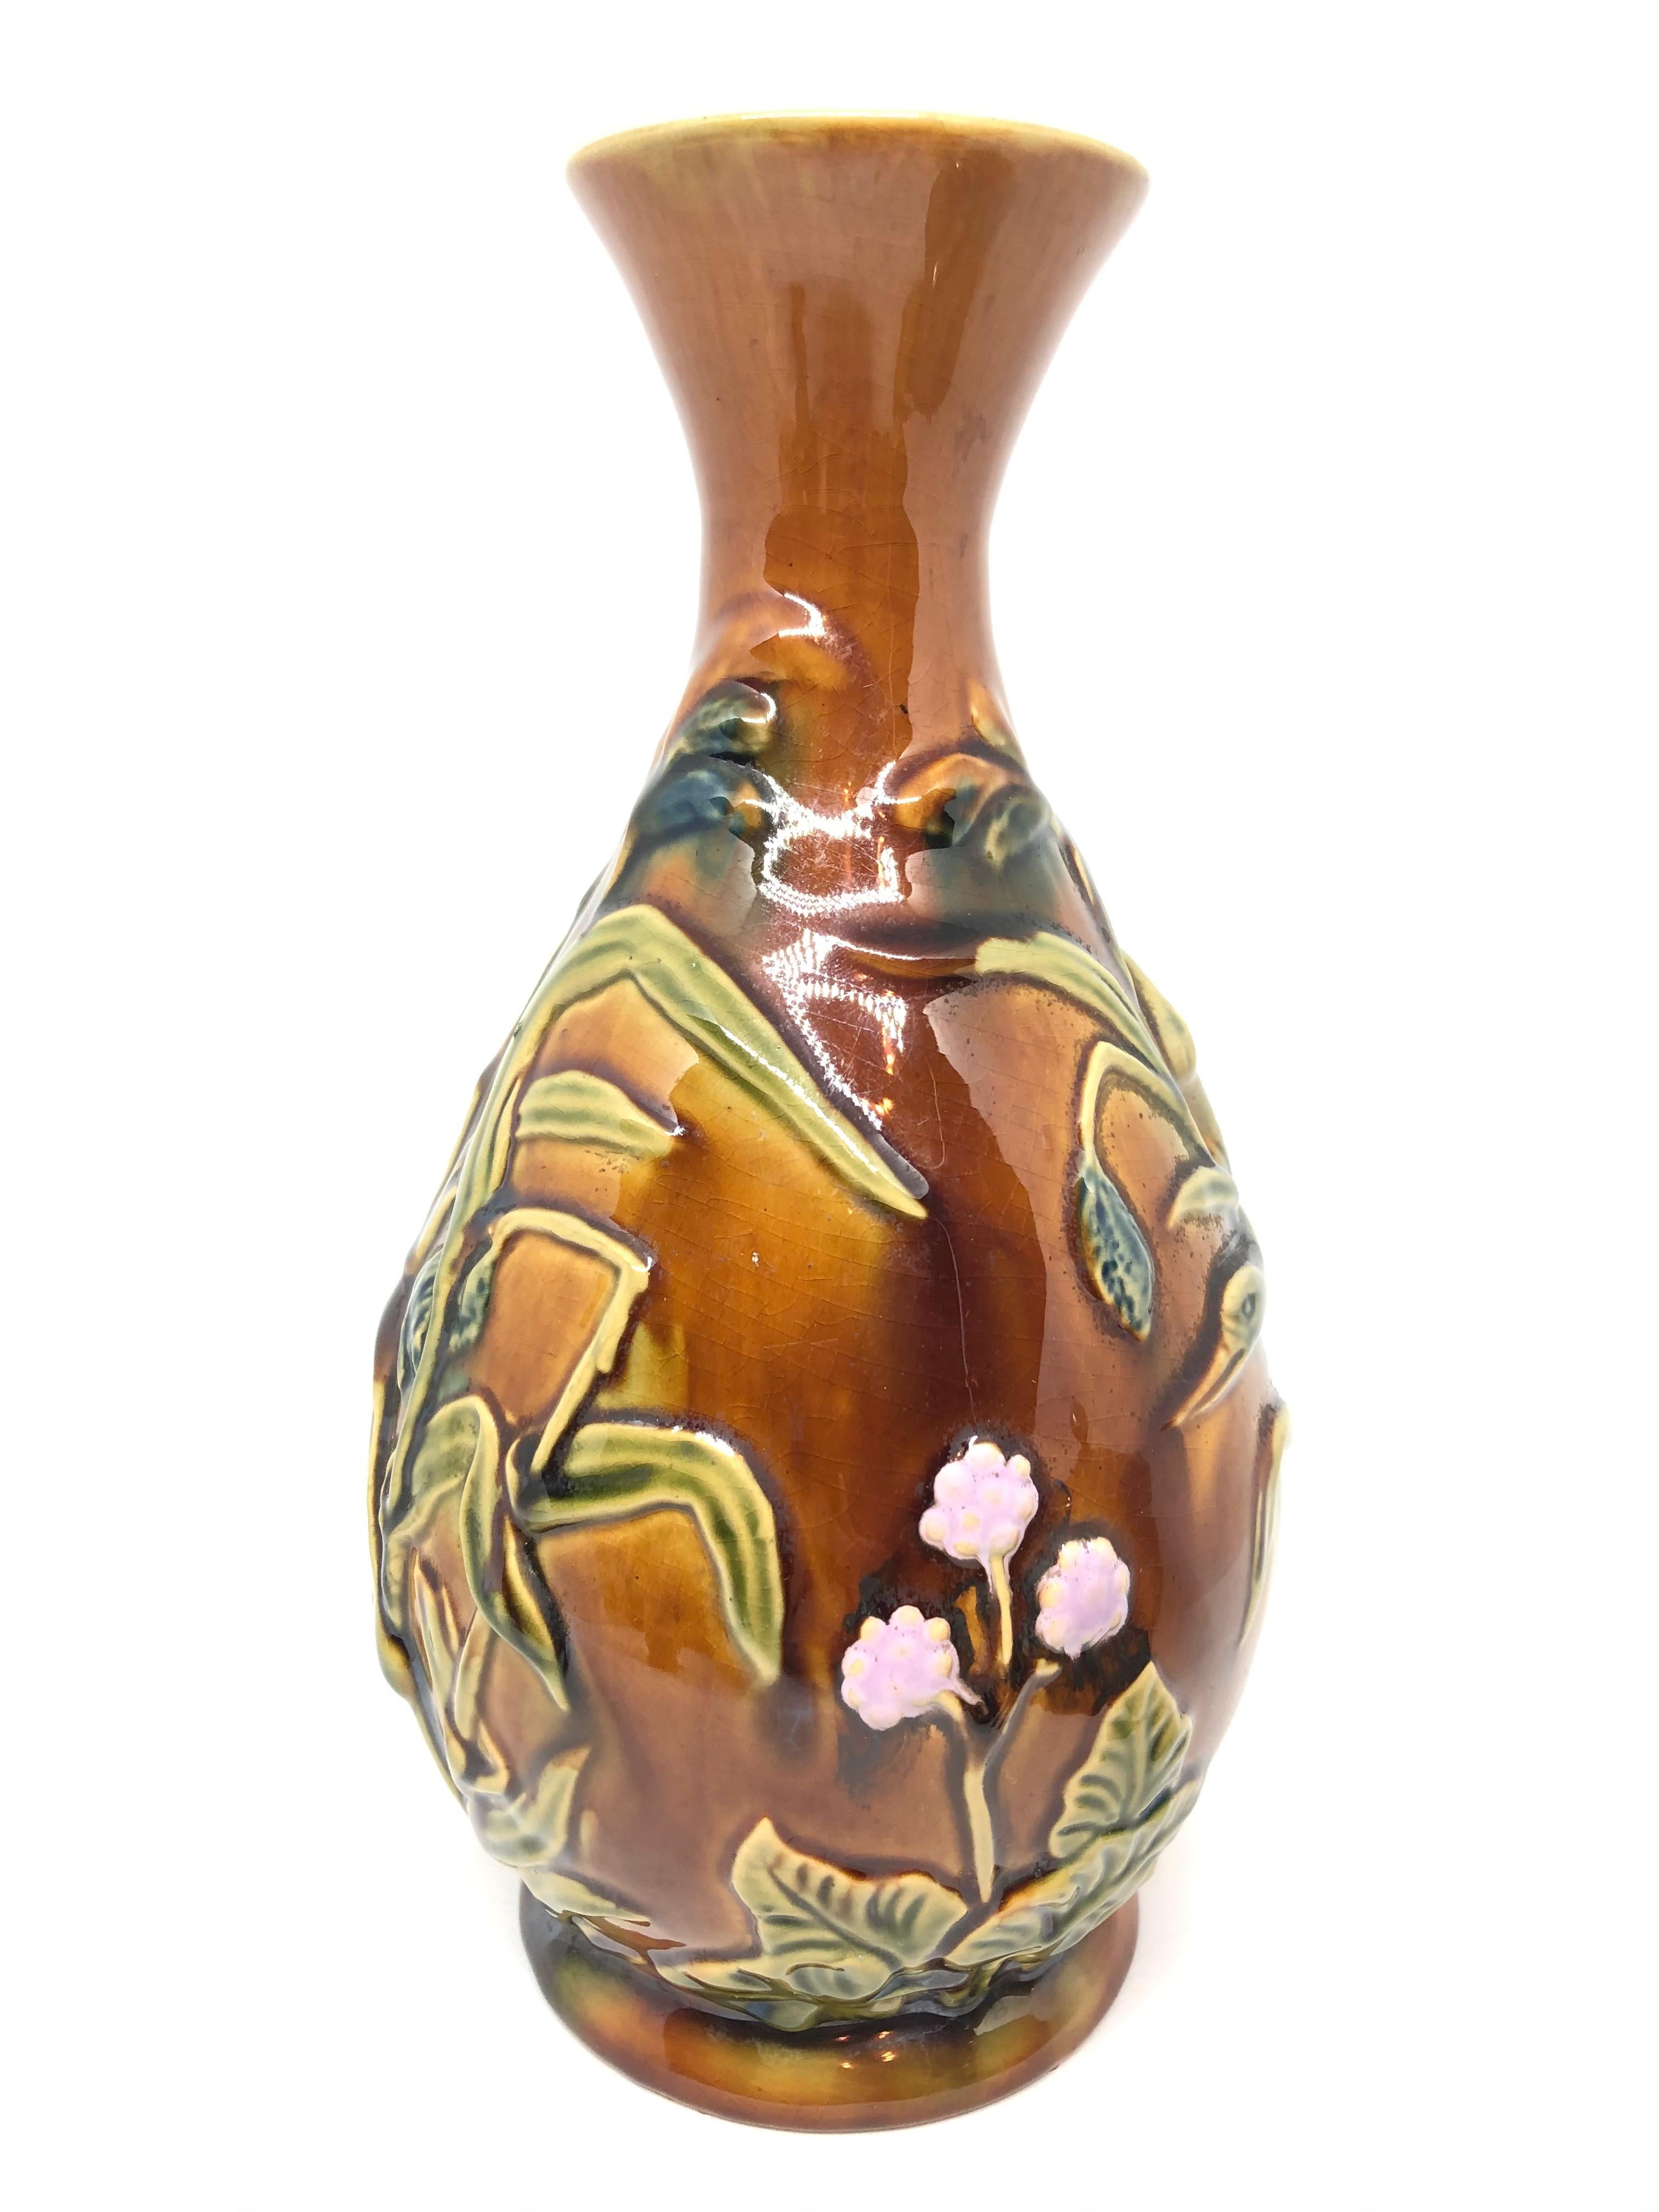 Art Nouveau Majolica Vase with Canebrake Reeds and a Duck, circa 1900 (Österreichisch)